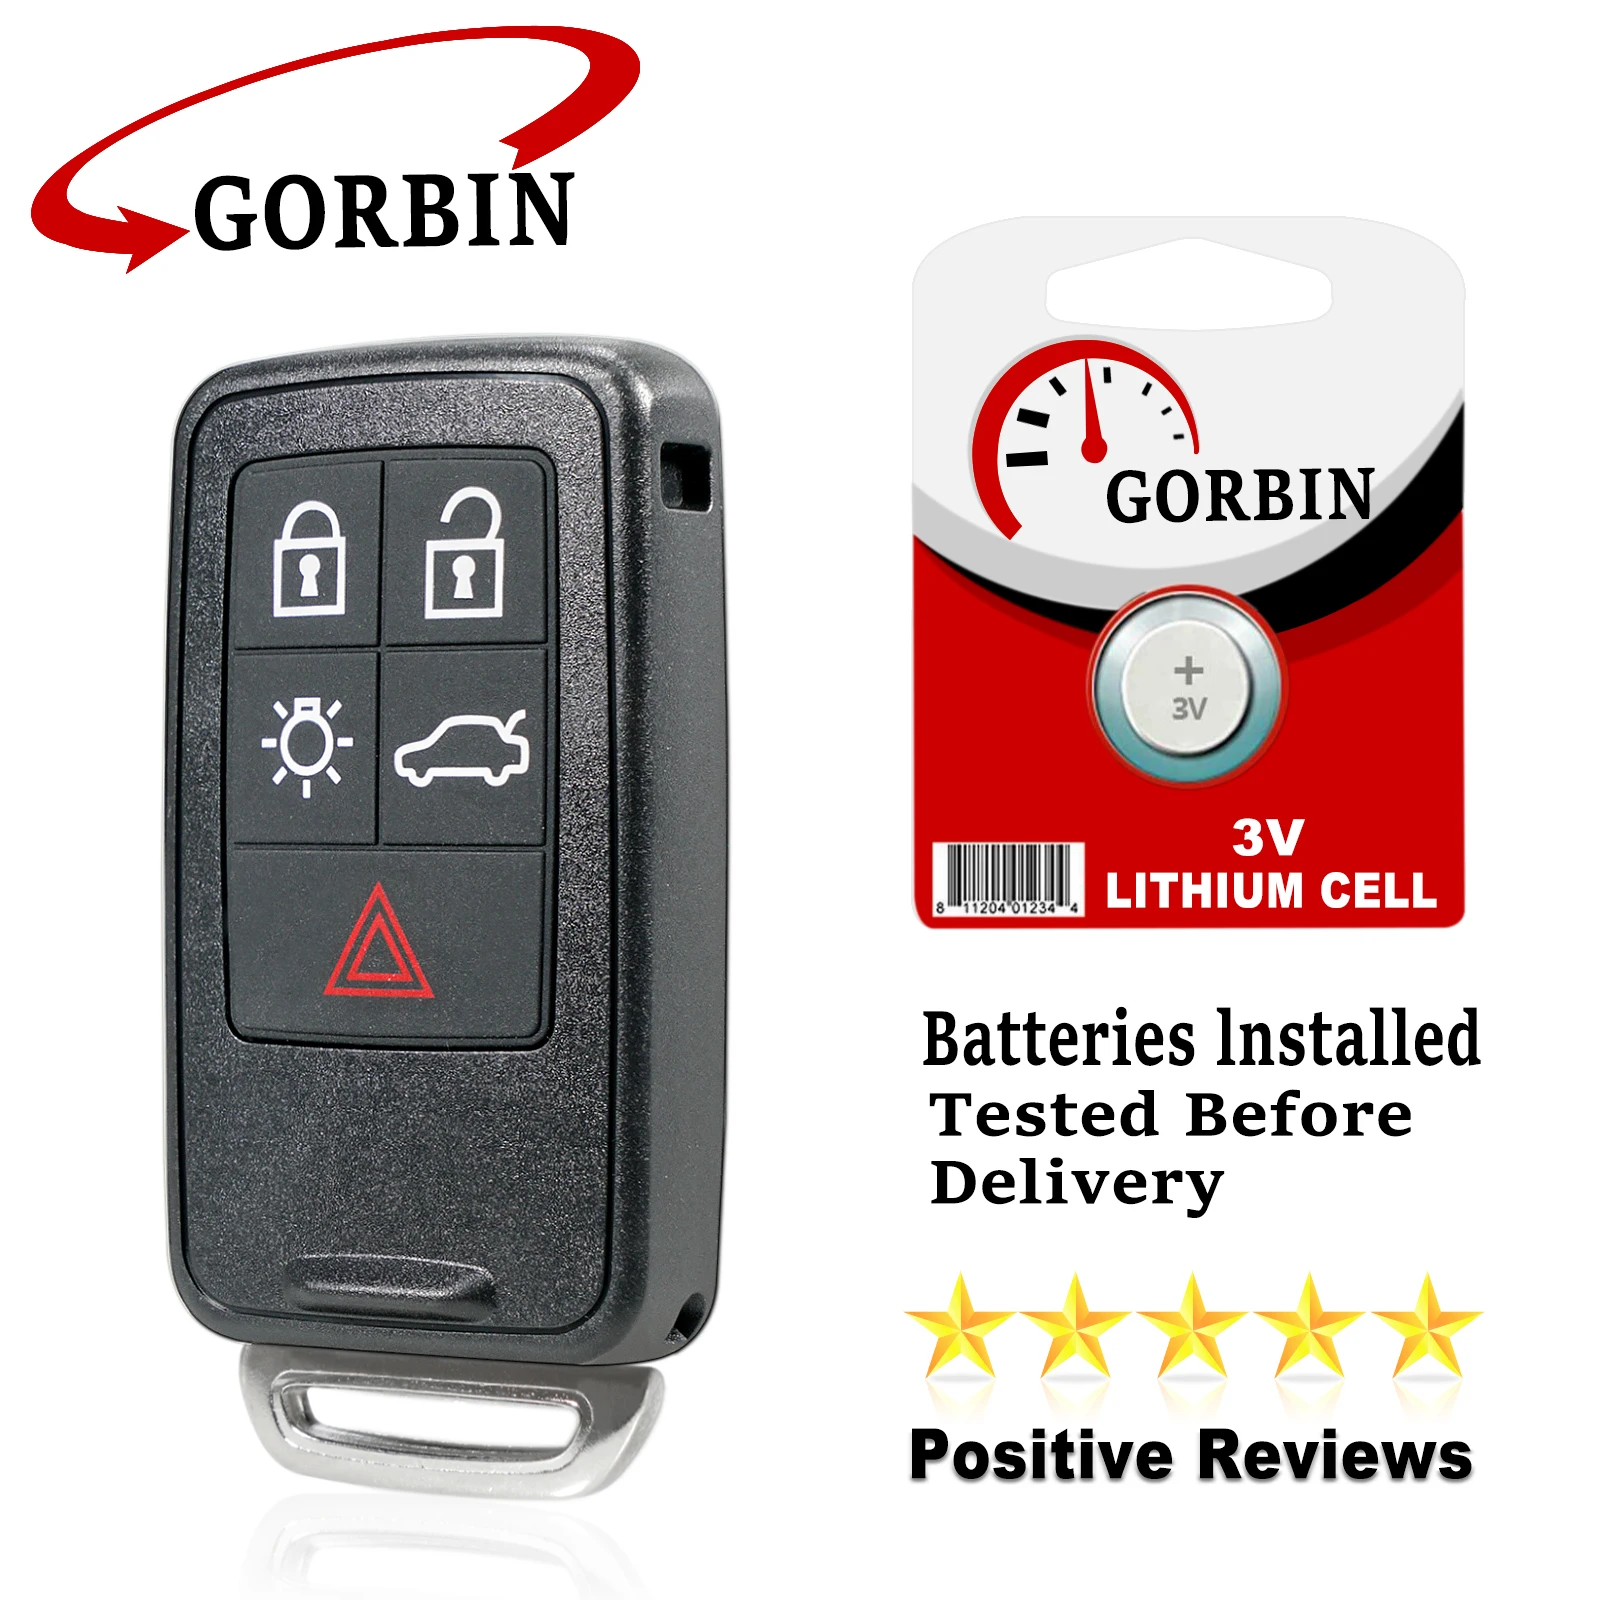 GORBIN Smart Car Remote Key for Volvo XC60 S60 S60L V40 V60 S80 XC70 KYDZ 5 Buttons 433Mhz FSK ID46/7953 Chip KR55WK49264